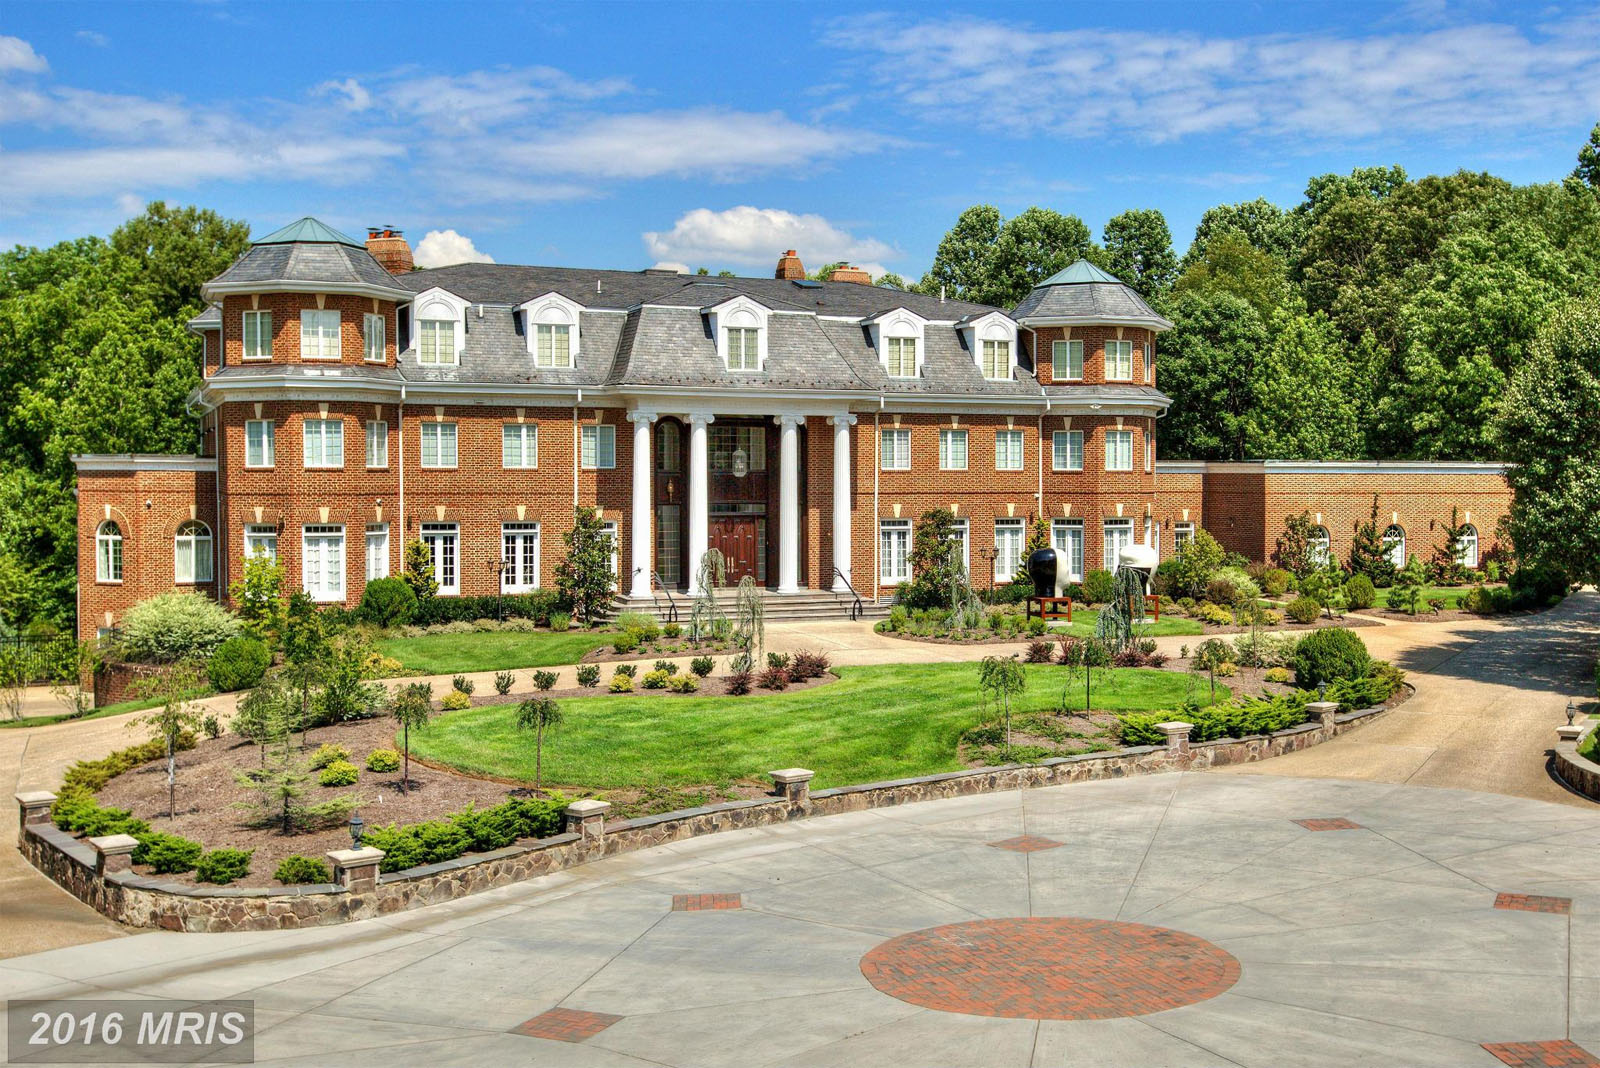 4. $3,775,000
This nine-bedrooom International-style brick mansion in Potomac, Maryland, was built in 1991. (MRIS)